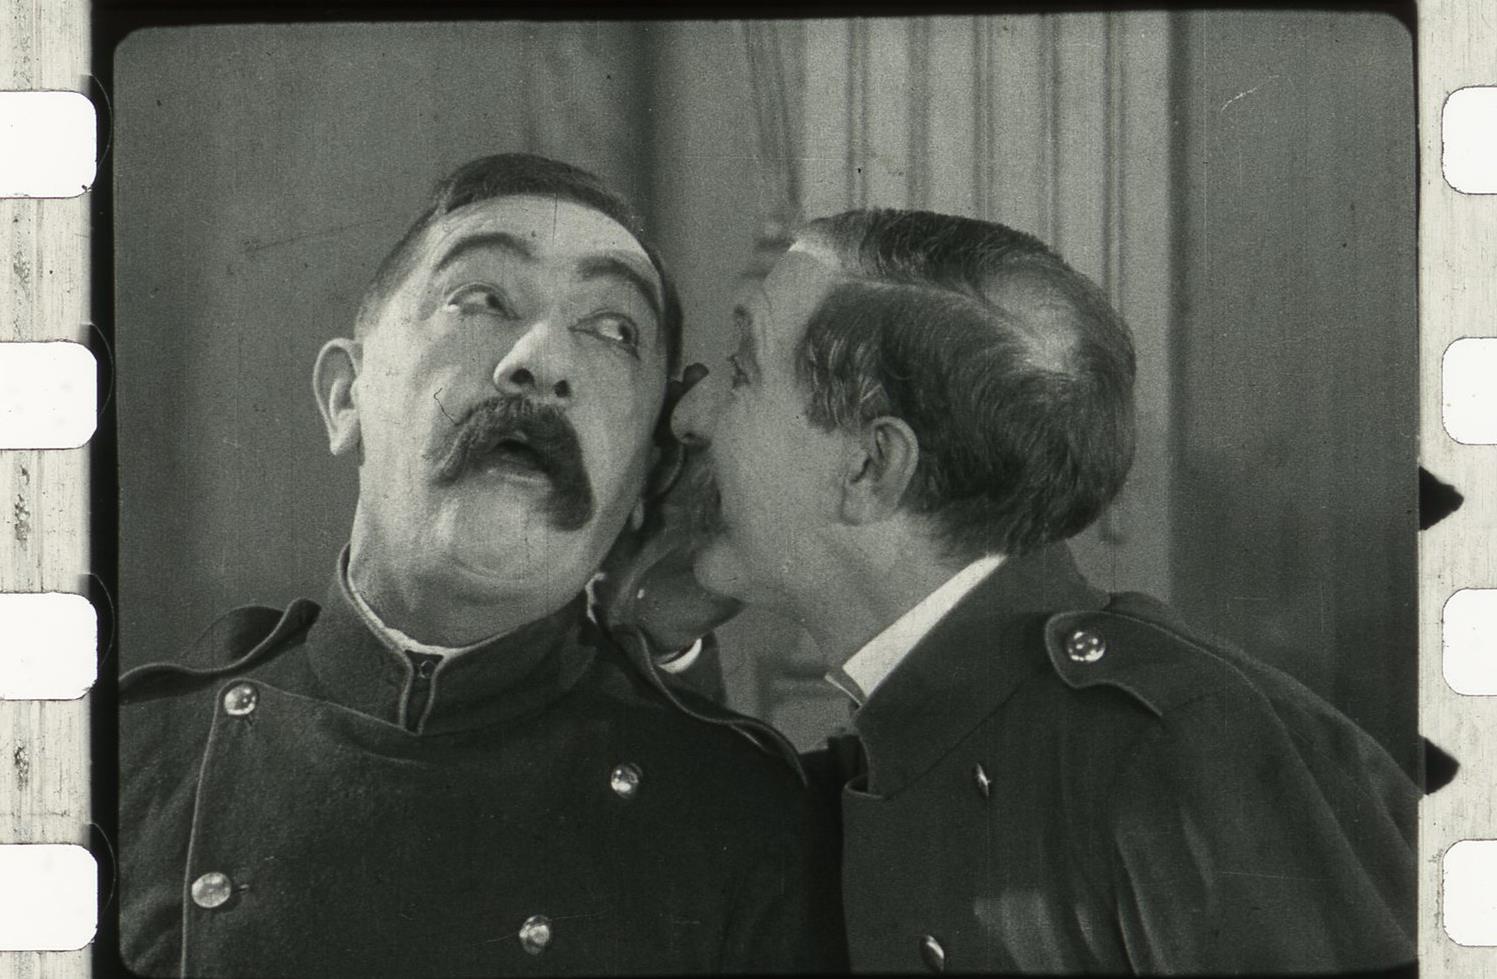 Eπιστρέφει η ταινία του 1924 που είδε την άνοδο του ναζισμού